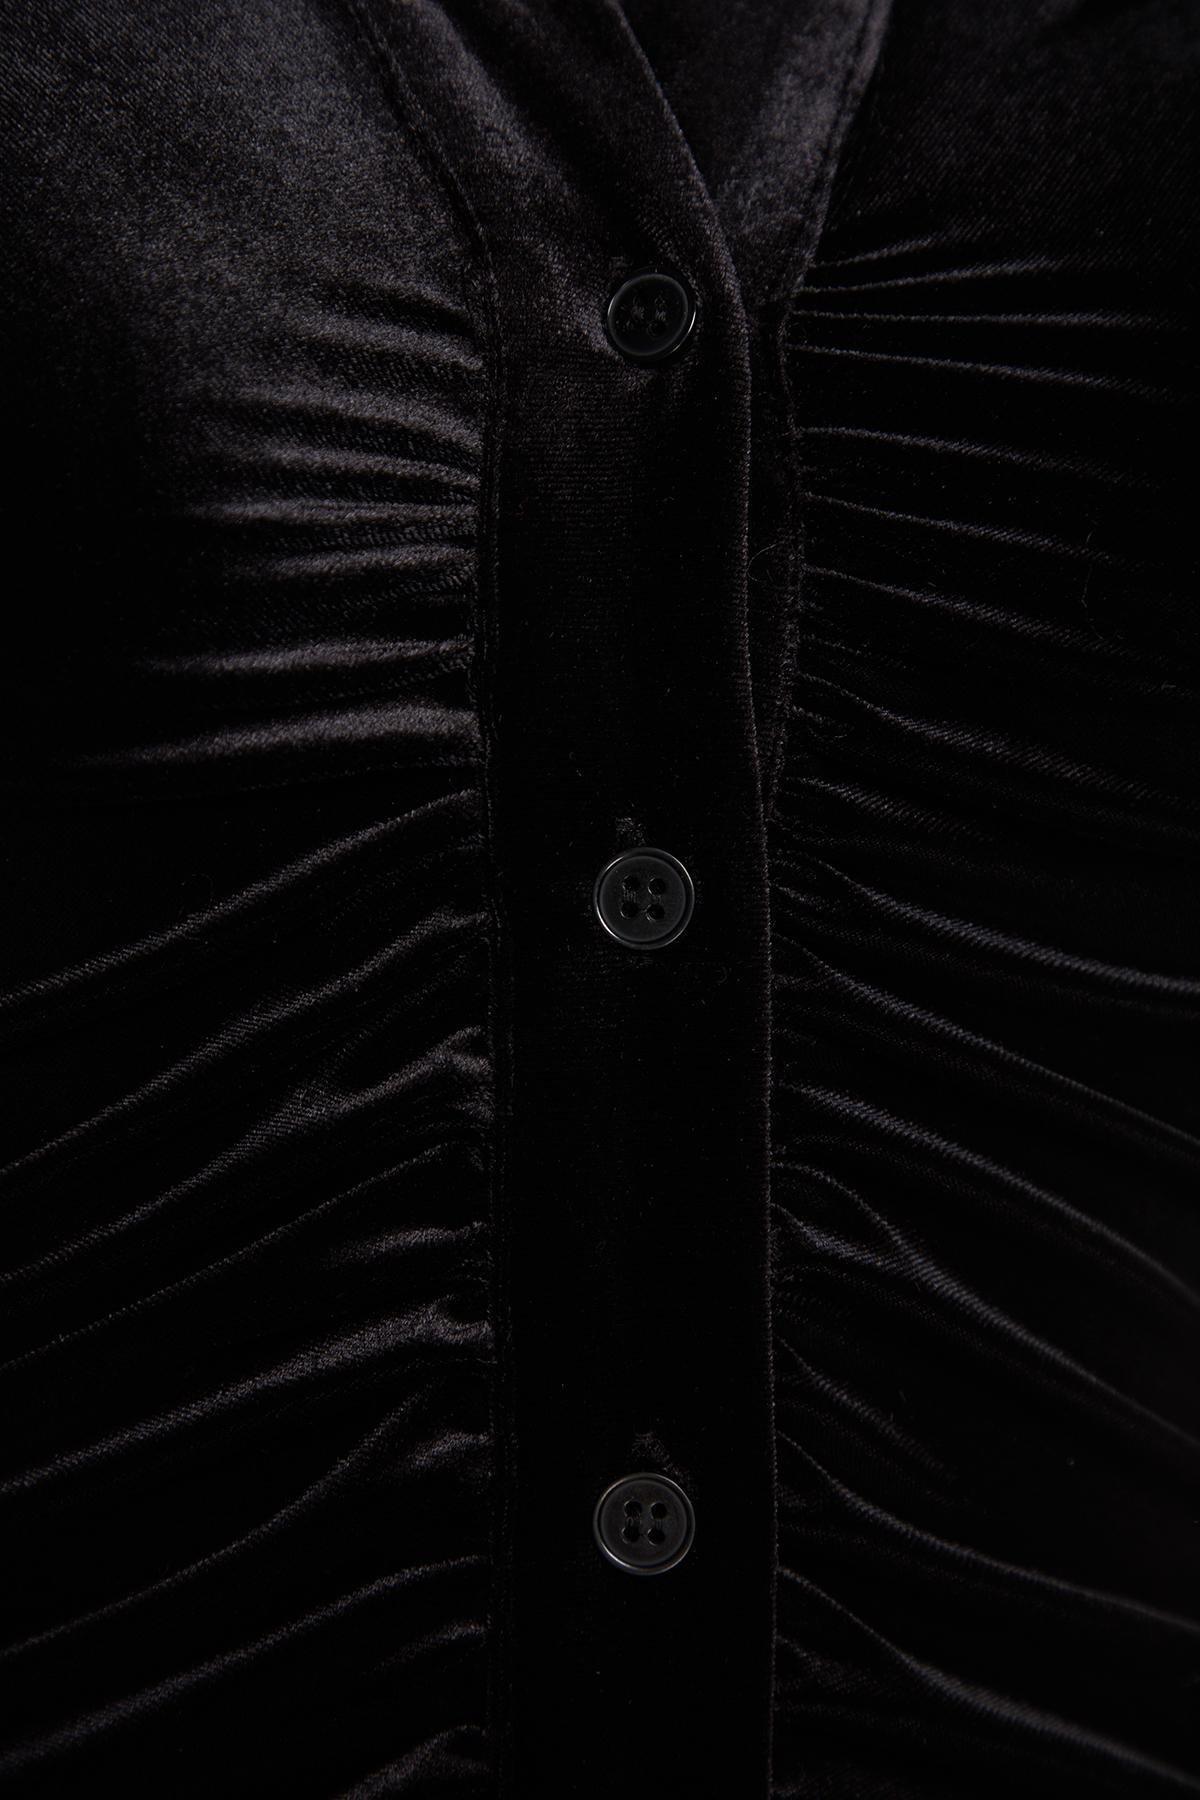 Trendyol - Black Polo Neck Velvet Midi Dress<br>